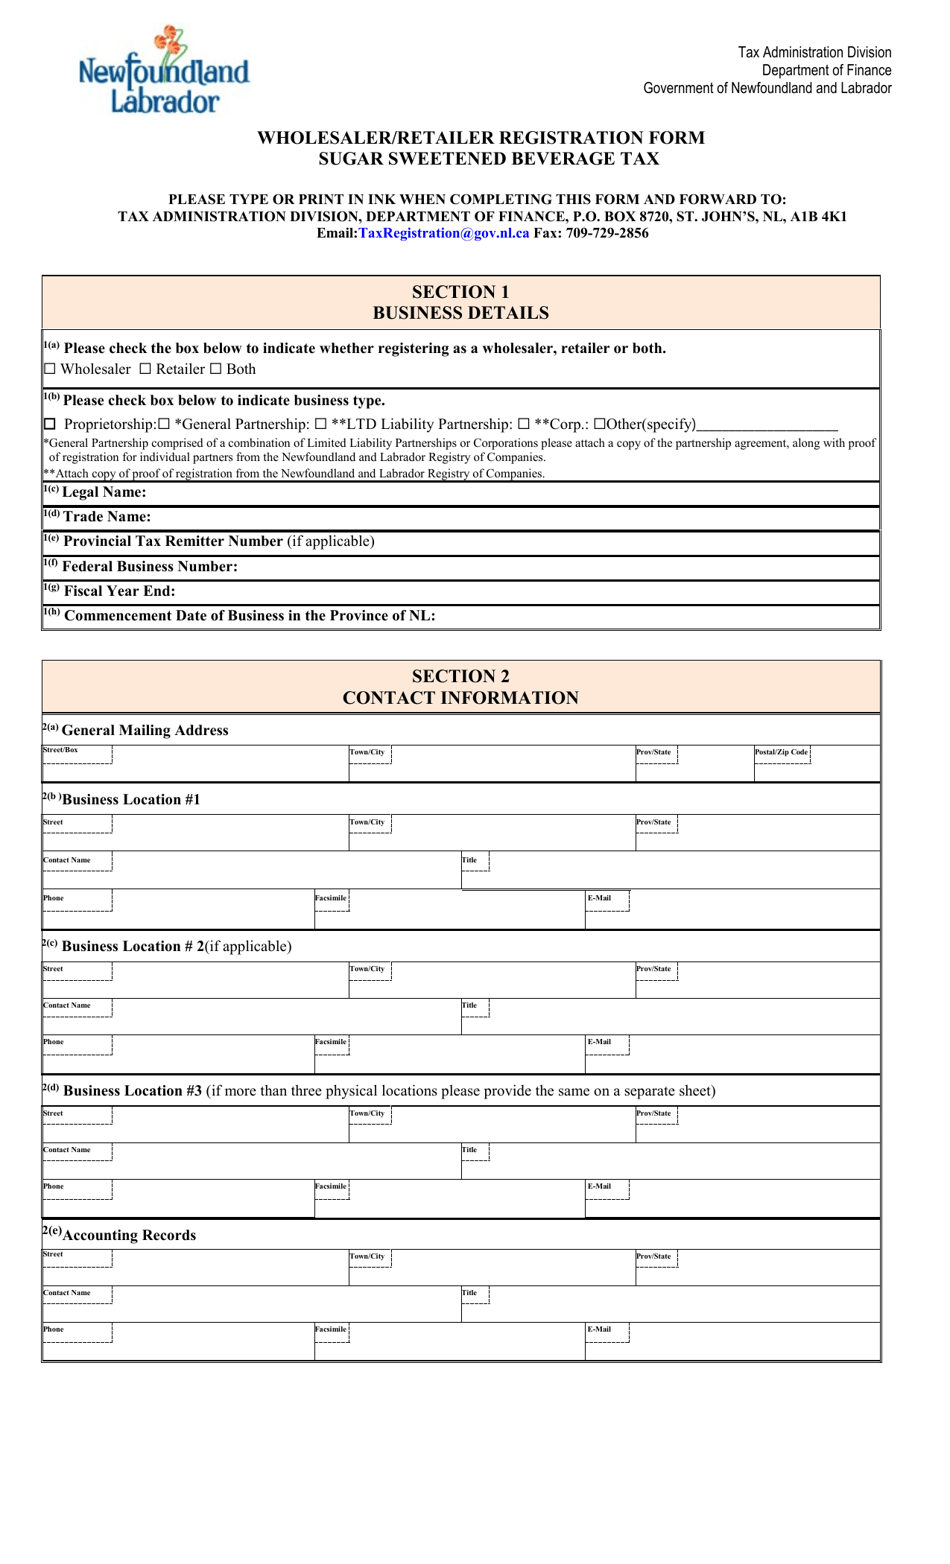 Wholesaler / Retailer Registration Form - Sugar Sweetened Beverage Tax - Newfoundland and Labrador, Canada, Page 1